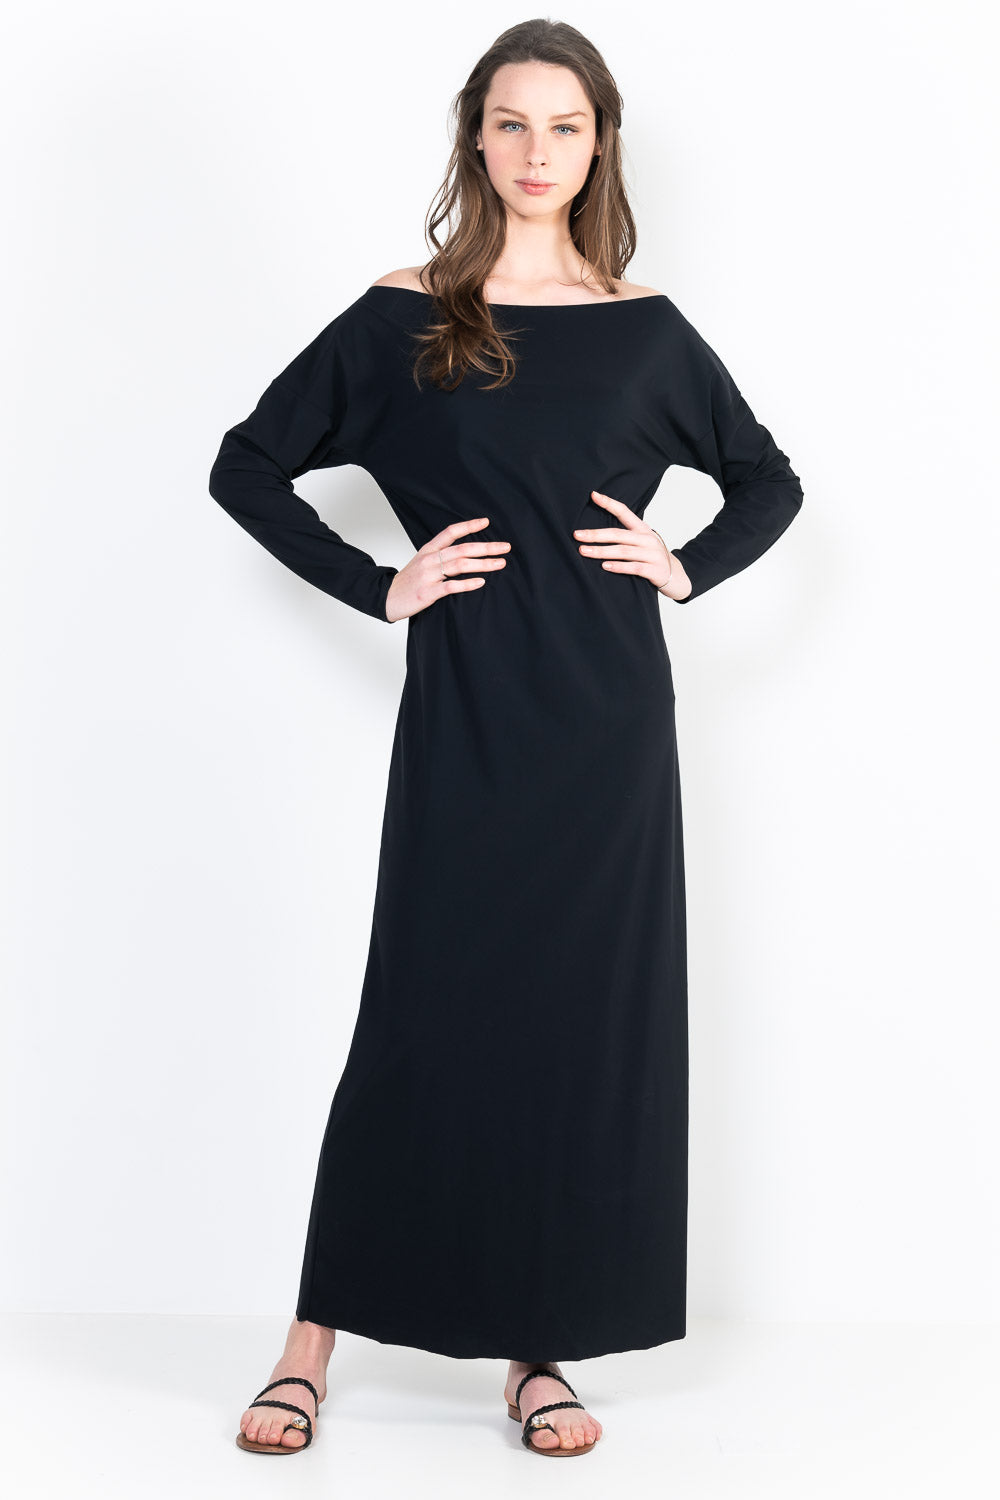 L52Bis Harem dress long sleeves long